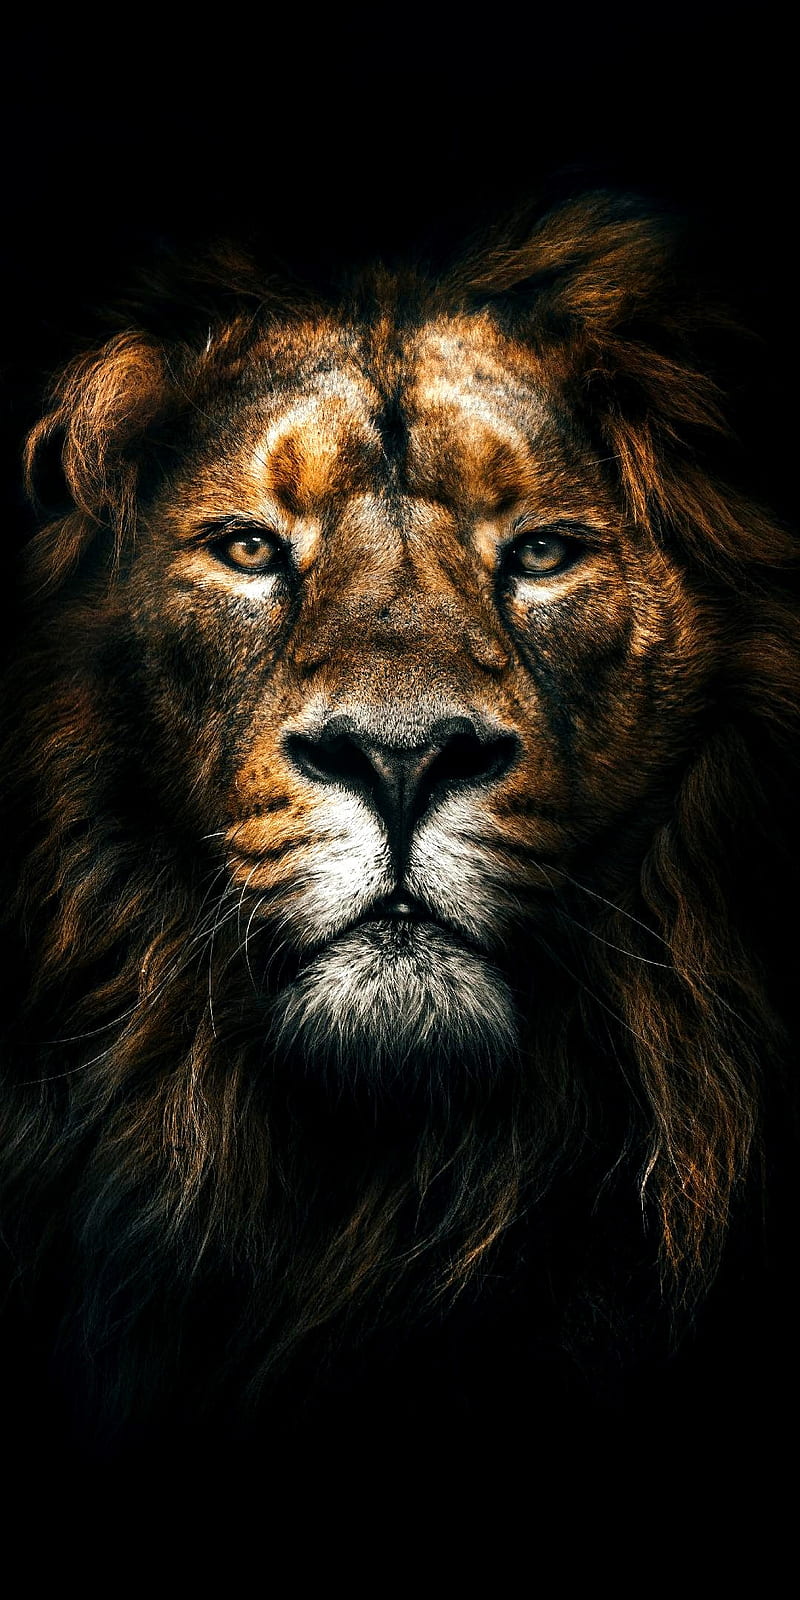 1920X1080Px, 1080P Free Download | Lion, King, Lions, Hd Phone